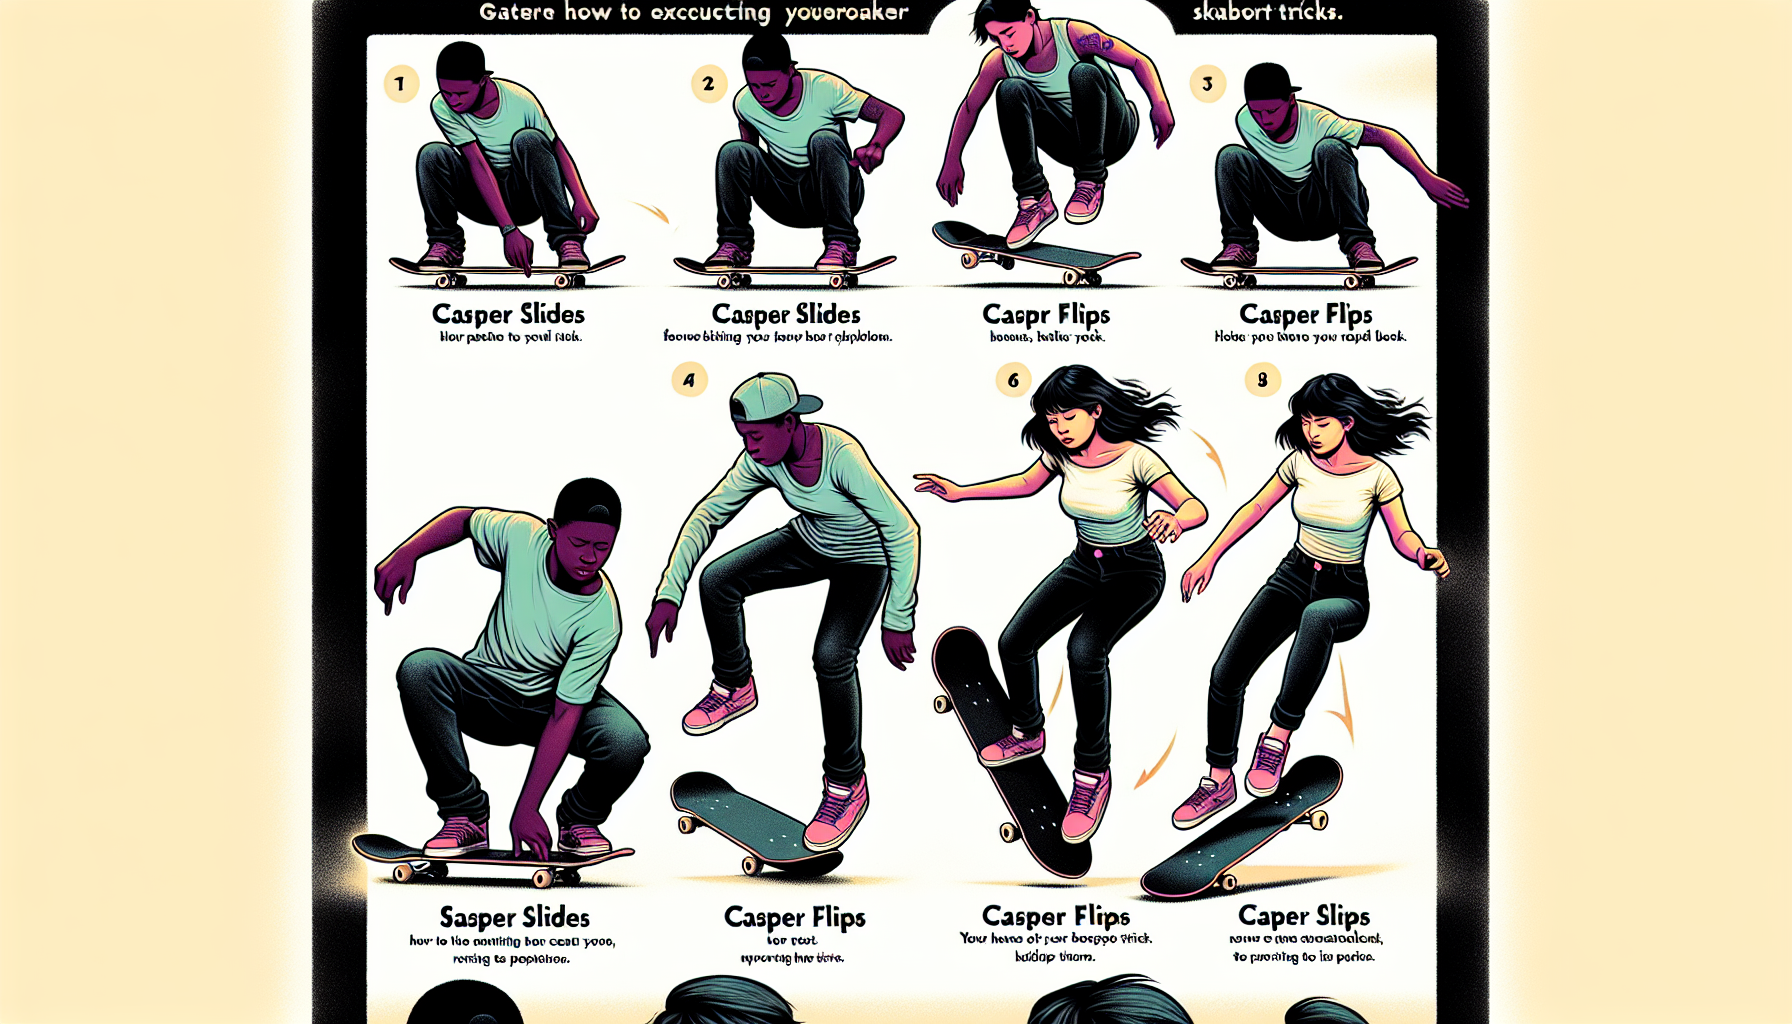 How Can I Improve My Skateboard Casper Slides And Casper Flips?